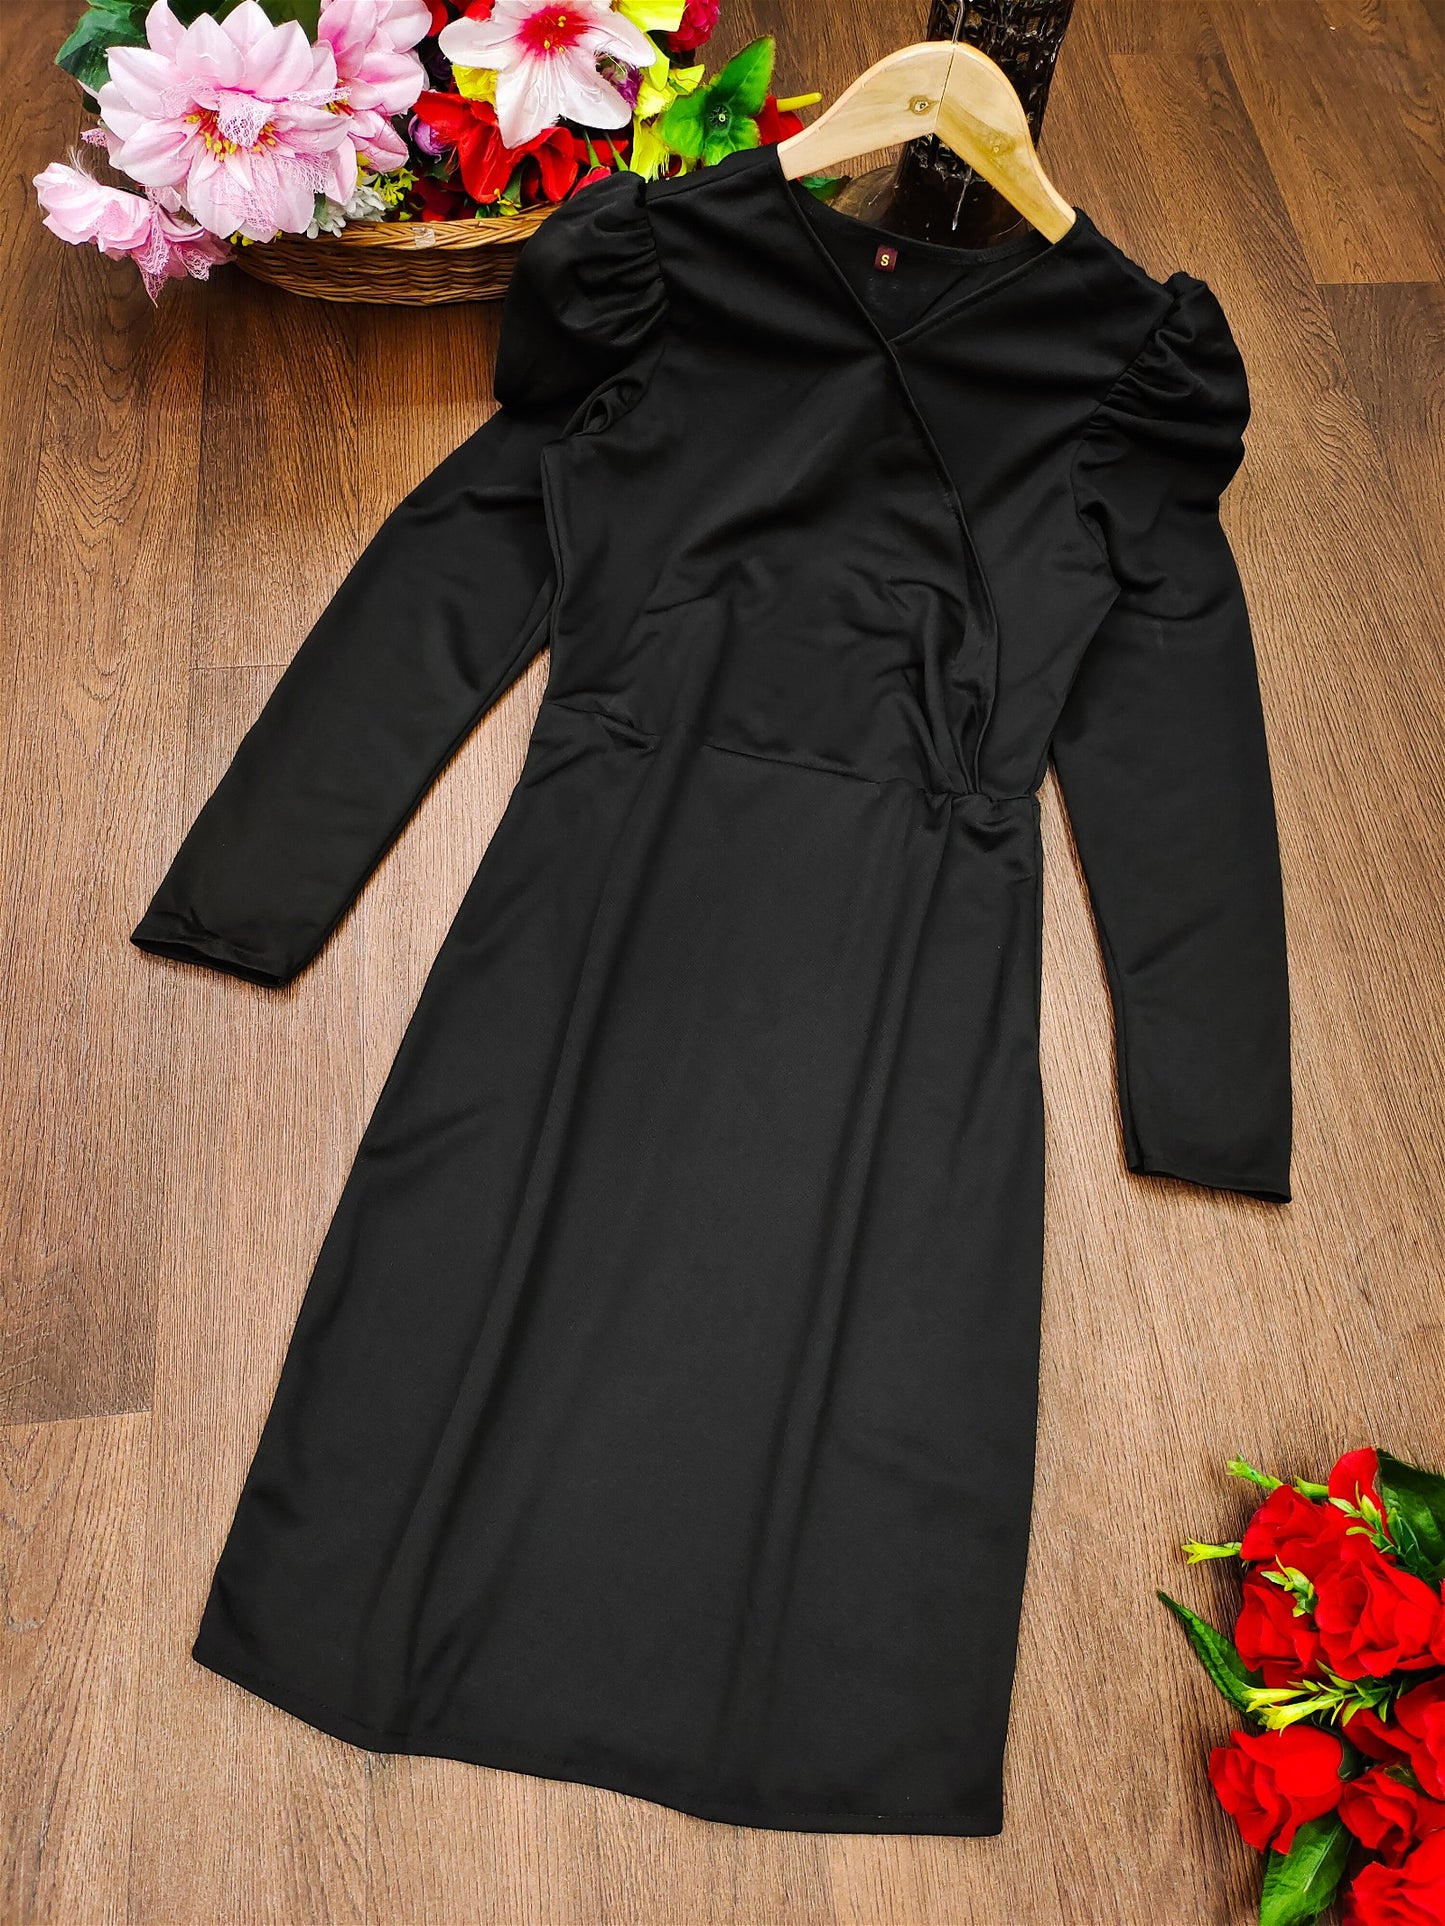 Black Bodycon Knee Length Dress